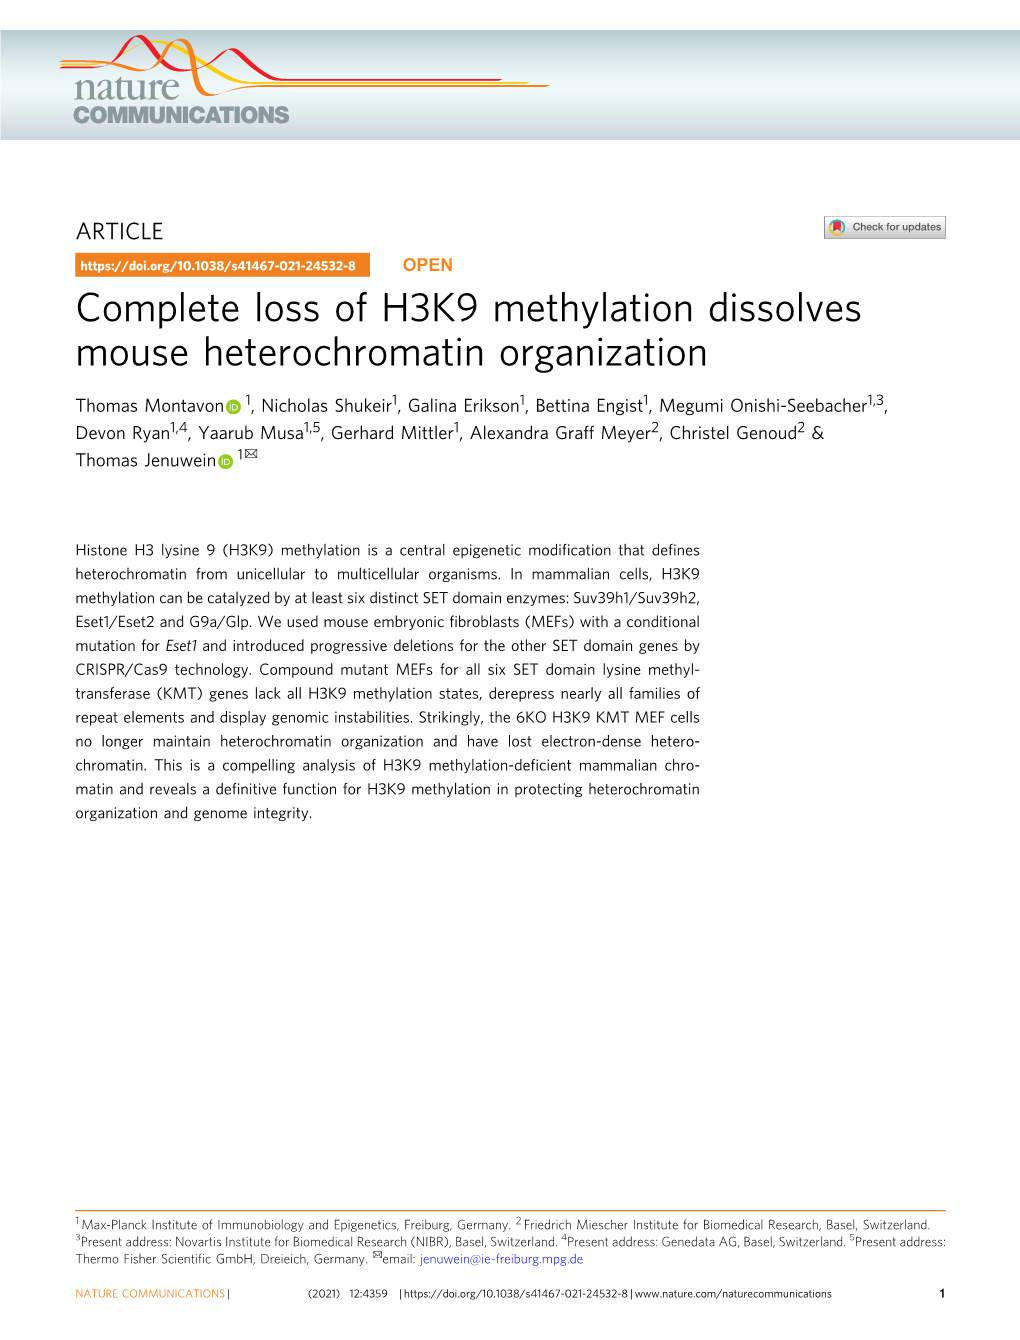 Complete Loss of H3K9 Methylation Dissolves Mouse Heterochromatin Organization